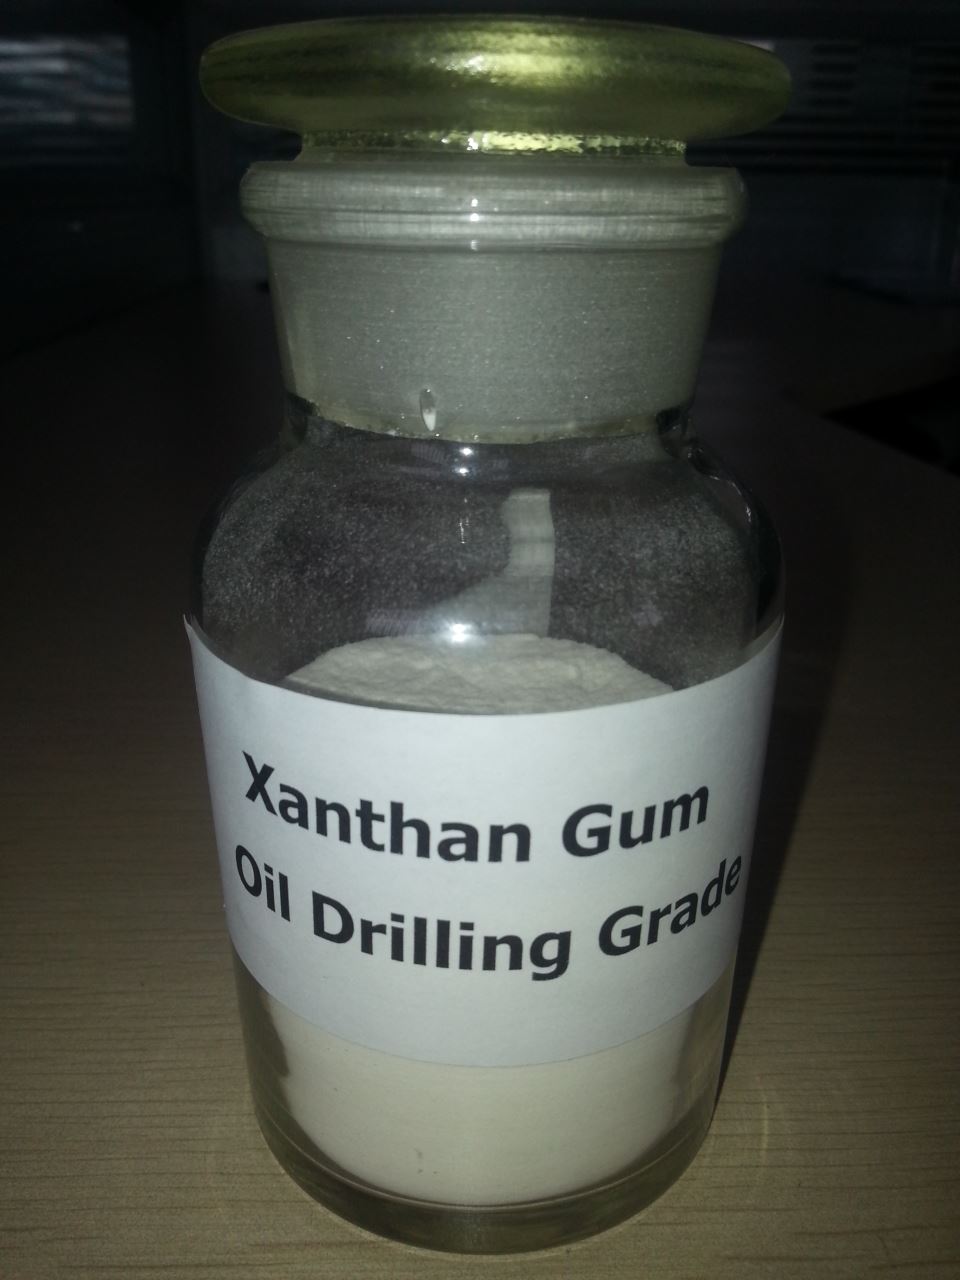 Oil Drilling Grade Xanthan Gum